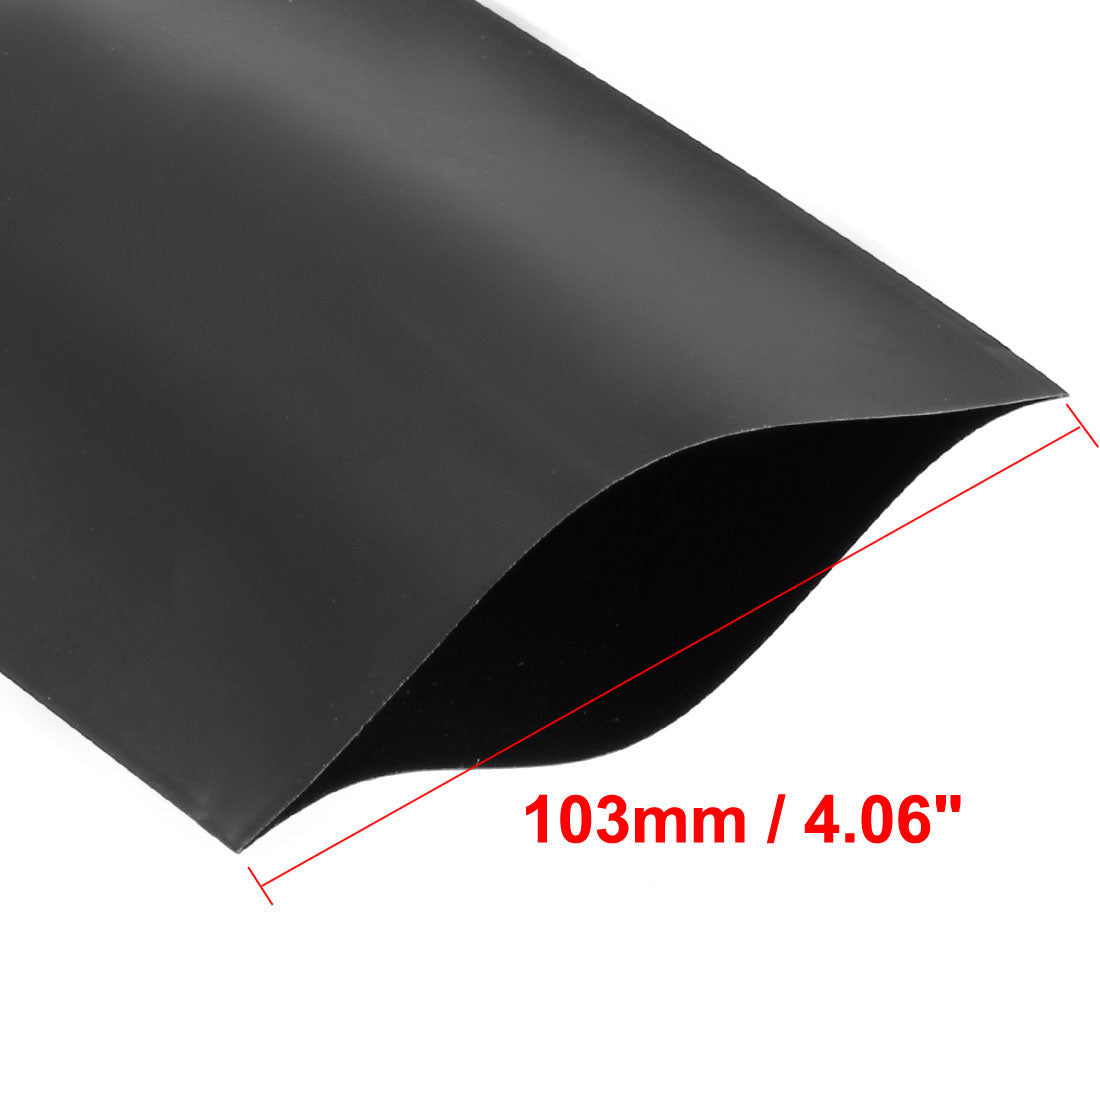 uxcell Uxcell PVC Heat Shrink Tubing Shrink Film 5m